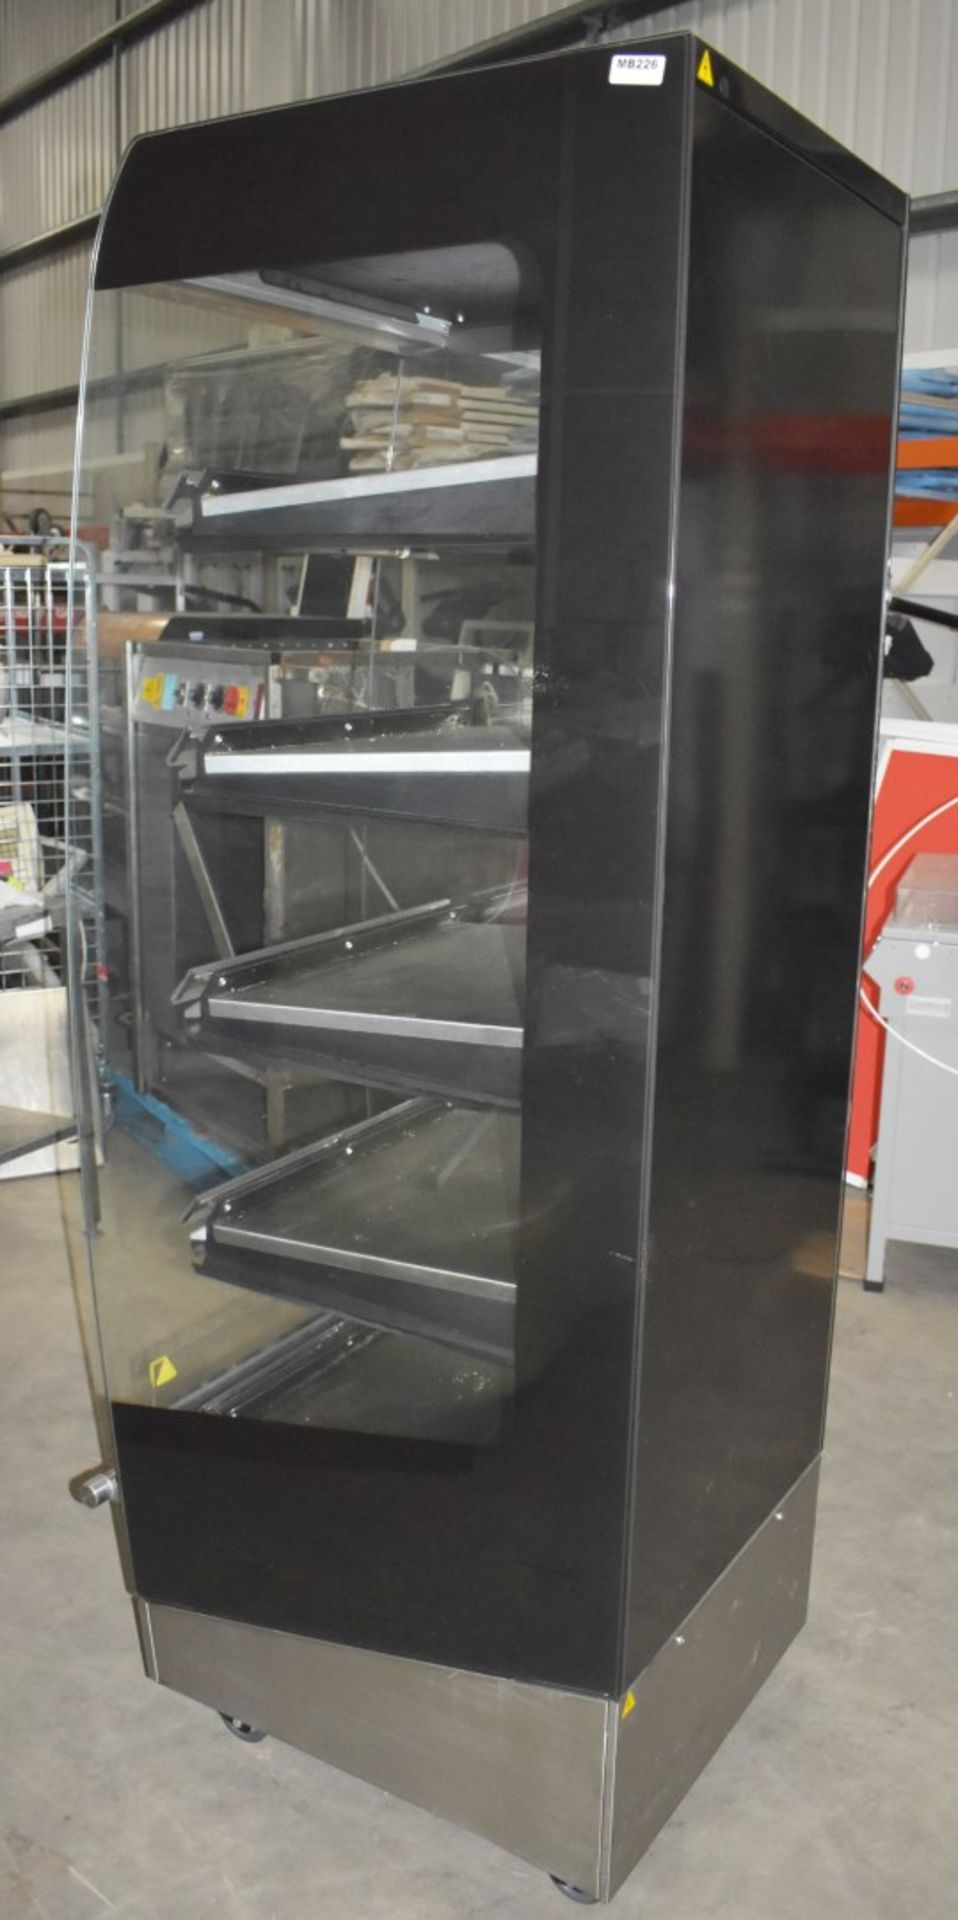 1 x Fri-Jado Four Tier Multi Deck Hot Food Warmer Heated Display Unit - Model MD60-5 SB - - Image 9 of 9